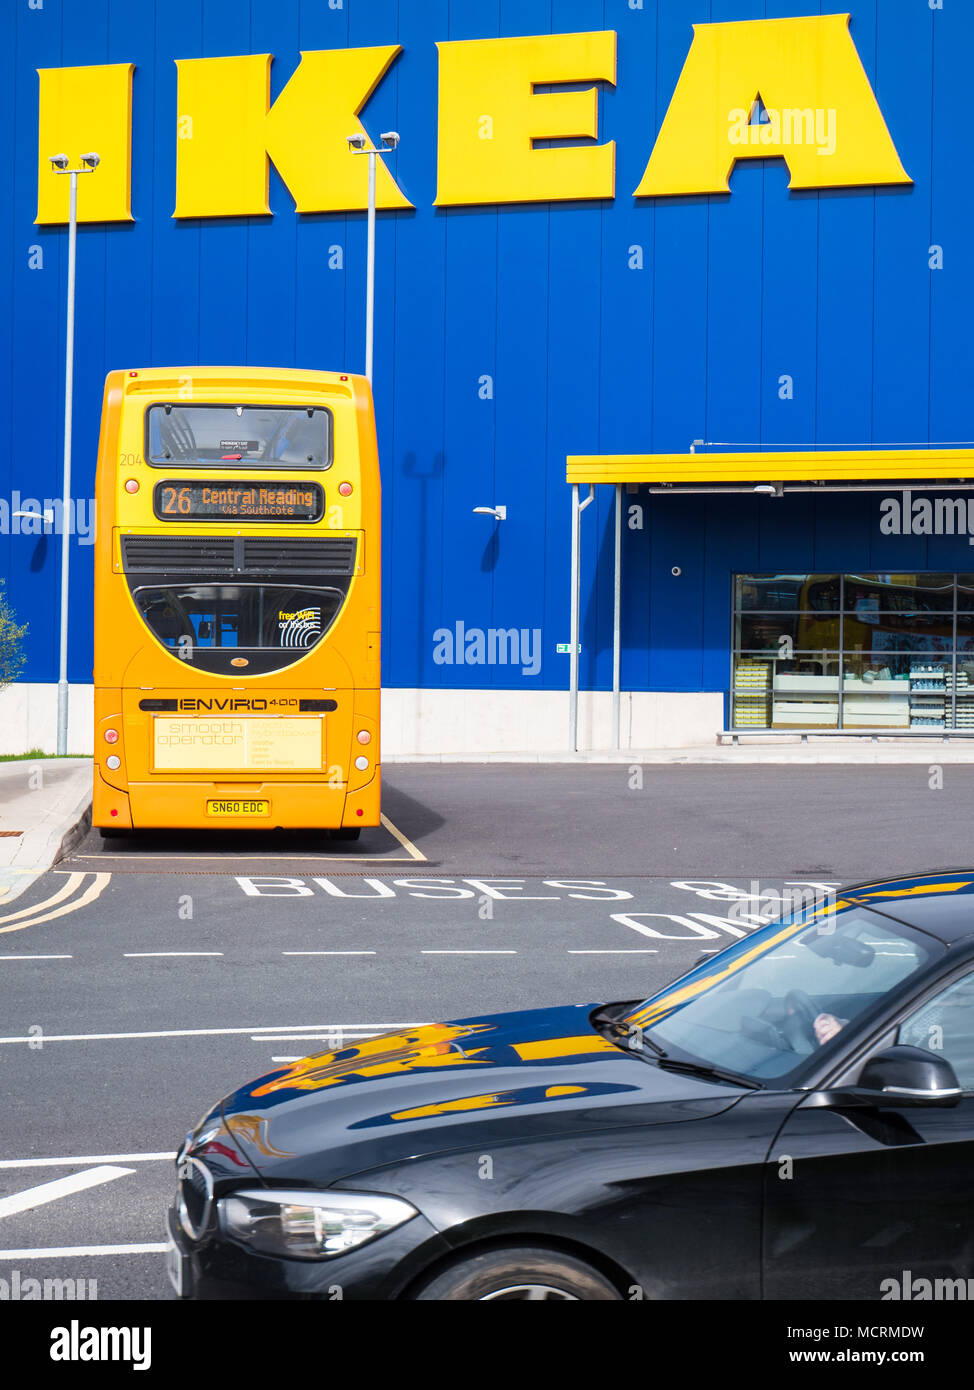 Ikea Dedicated Bus, Ikea Superstore, Calcot, Reading, Berkshire, England,  UK, GB Stock Photo - Alamy